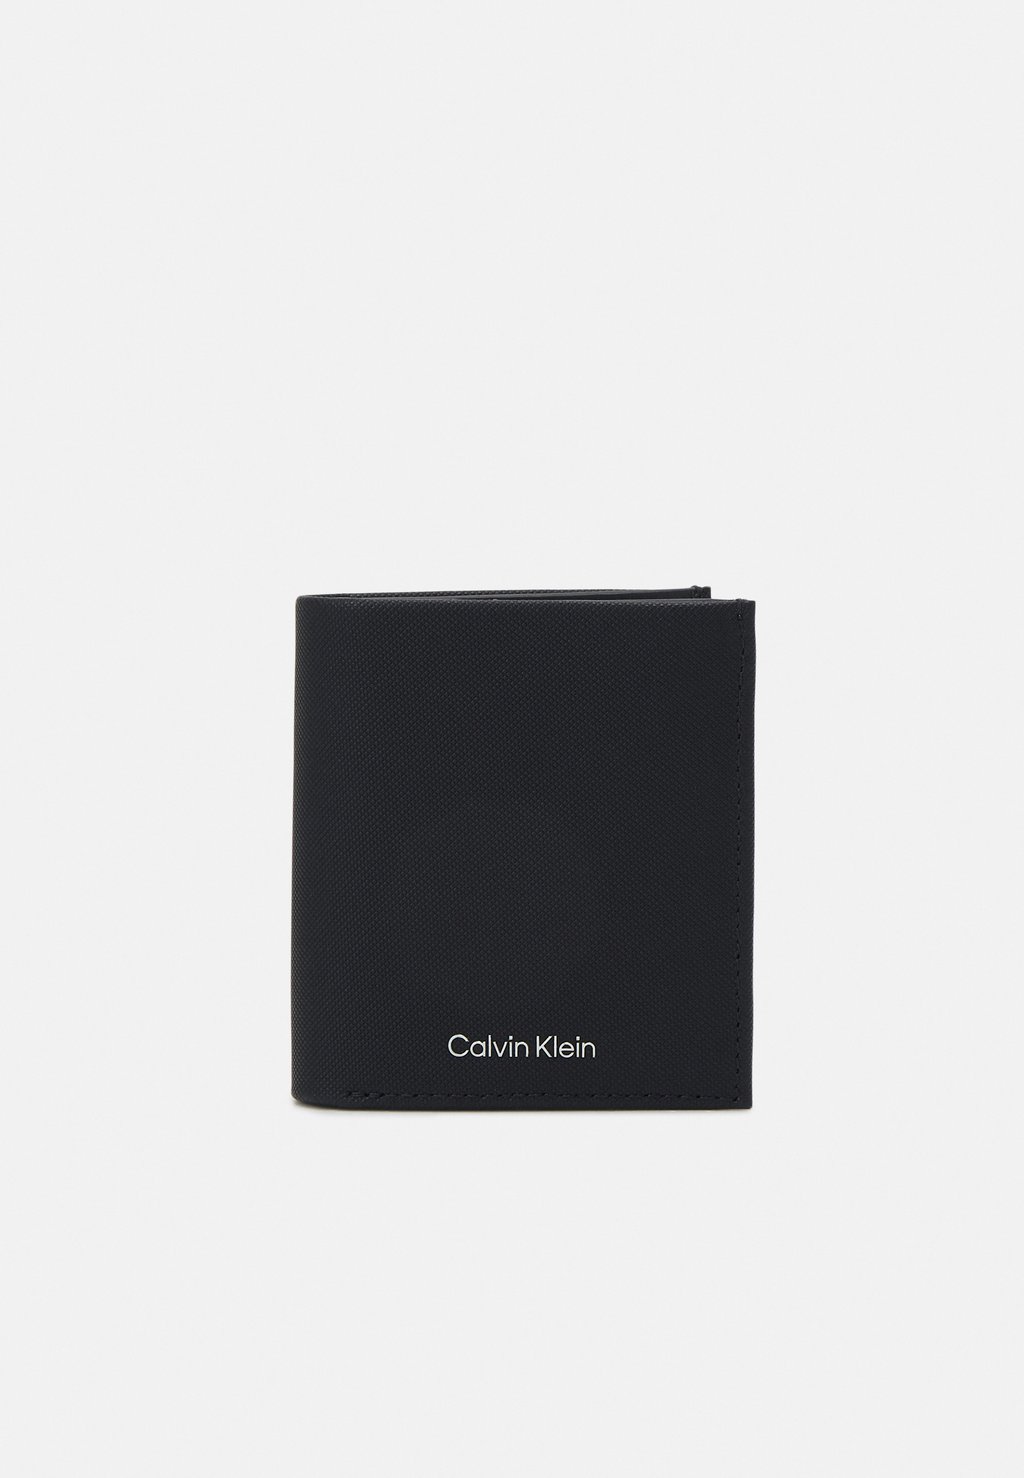 Кошелек MUST TRIFOLD COIN Calvin Klein, цвет black кошелек mini quilt small trifold calvin klein цвет black